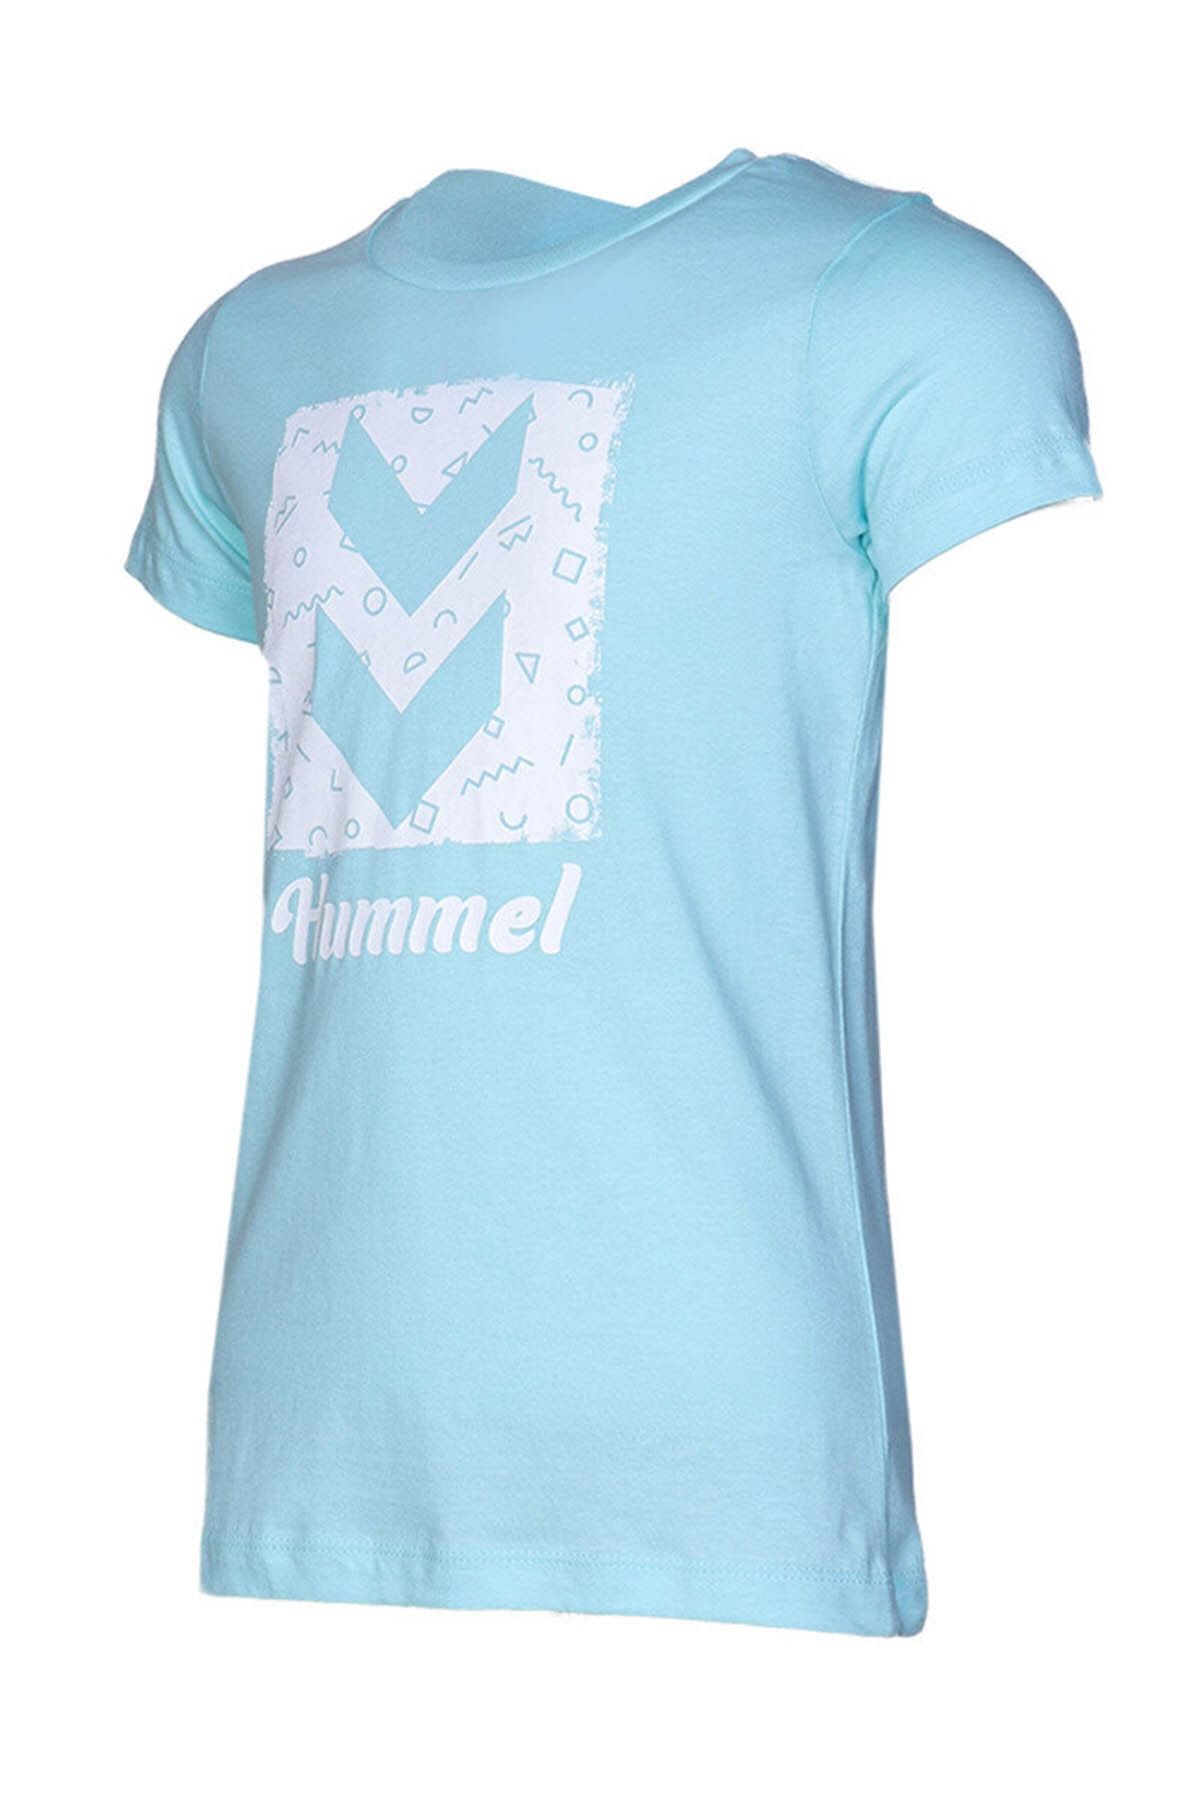 hummel HMLCALINA  T-SHIRT S/S Turkuaz Kız Çocuk T-Shirt 100580997